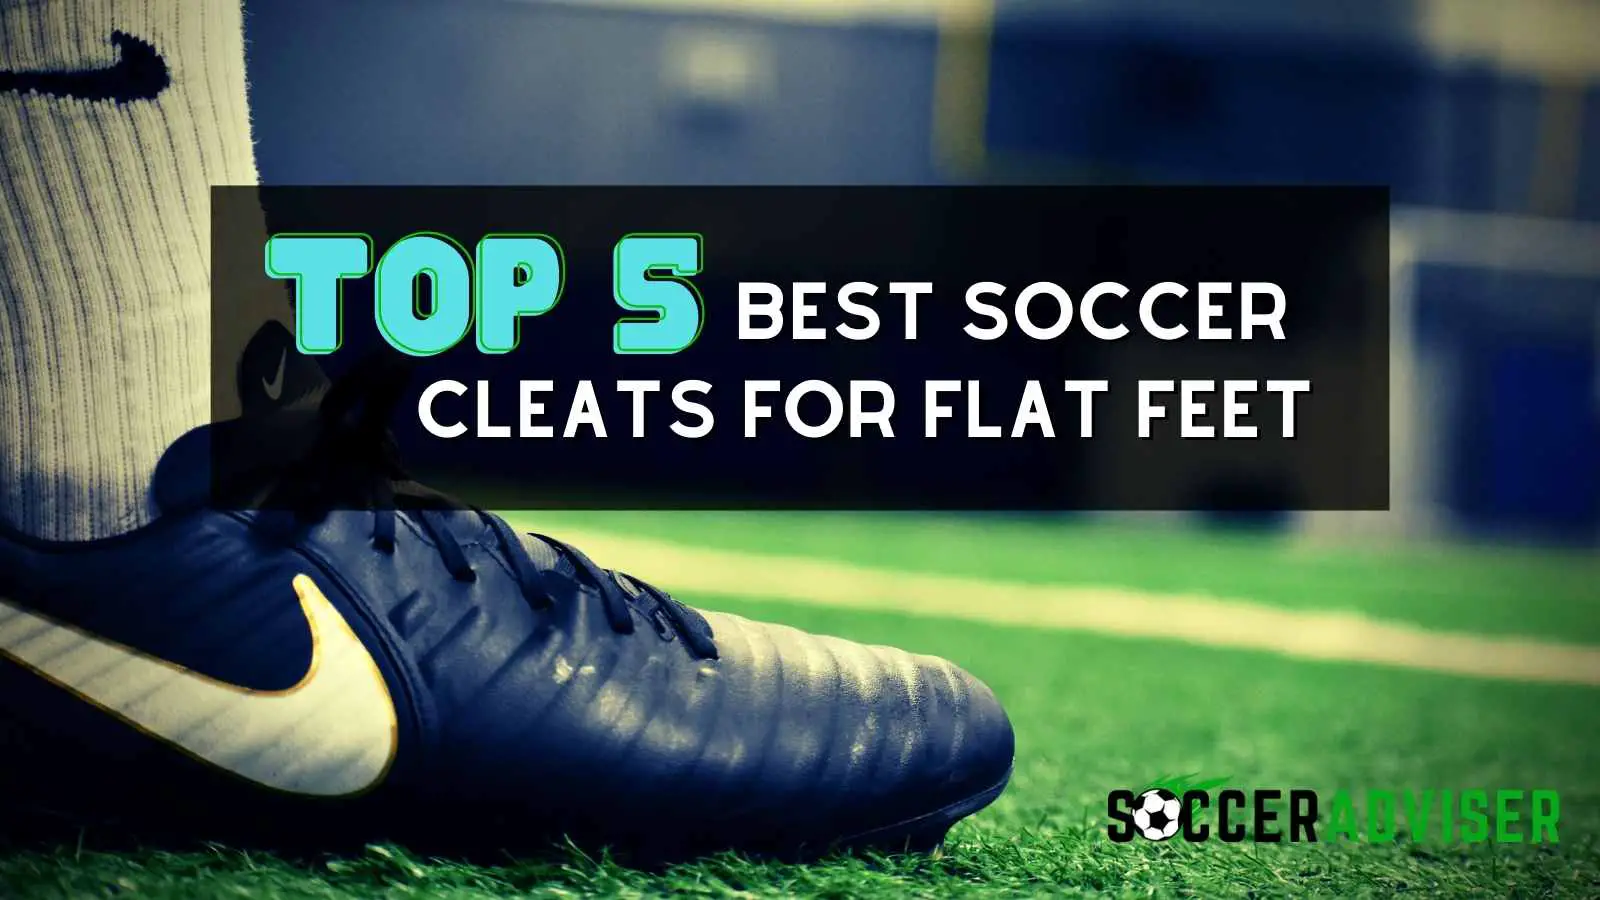 Top 5 Best Soccer Cleats For Flat Feet